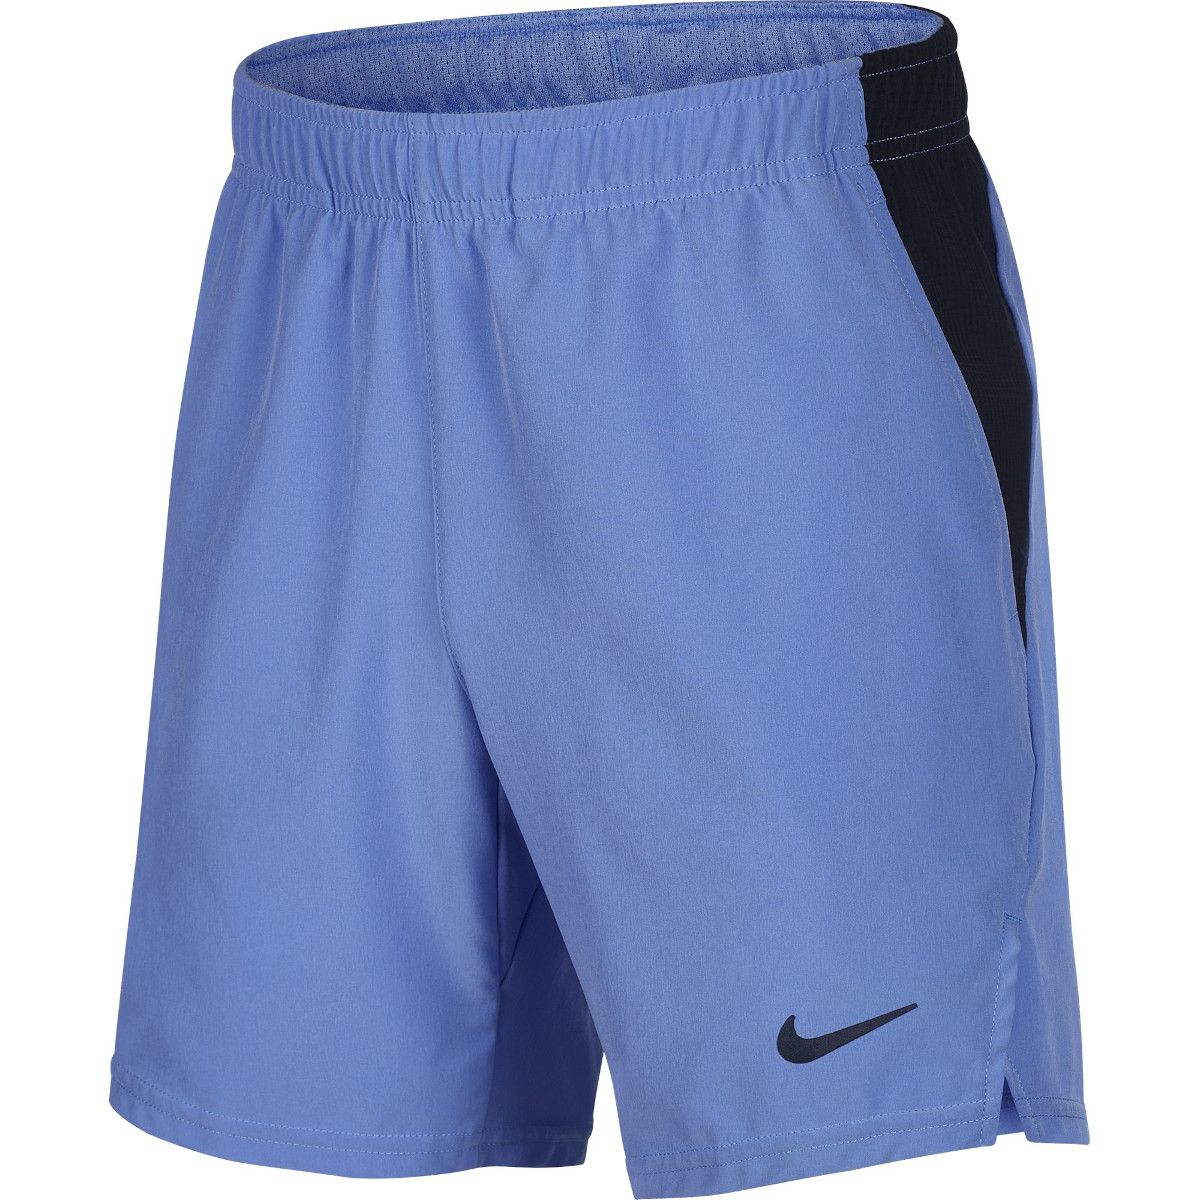 NikeCourt Flex Ace Boy's Tennis Shorts CI9409-478